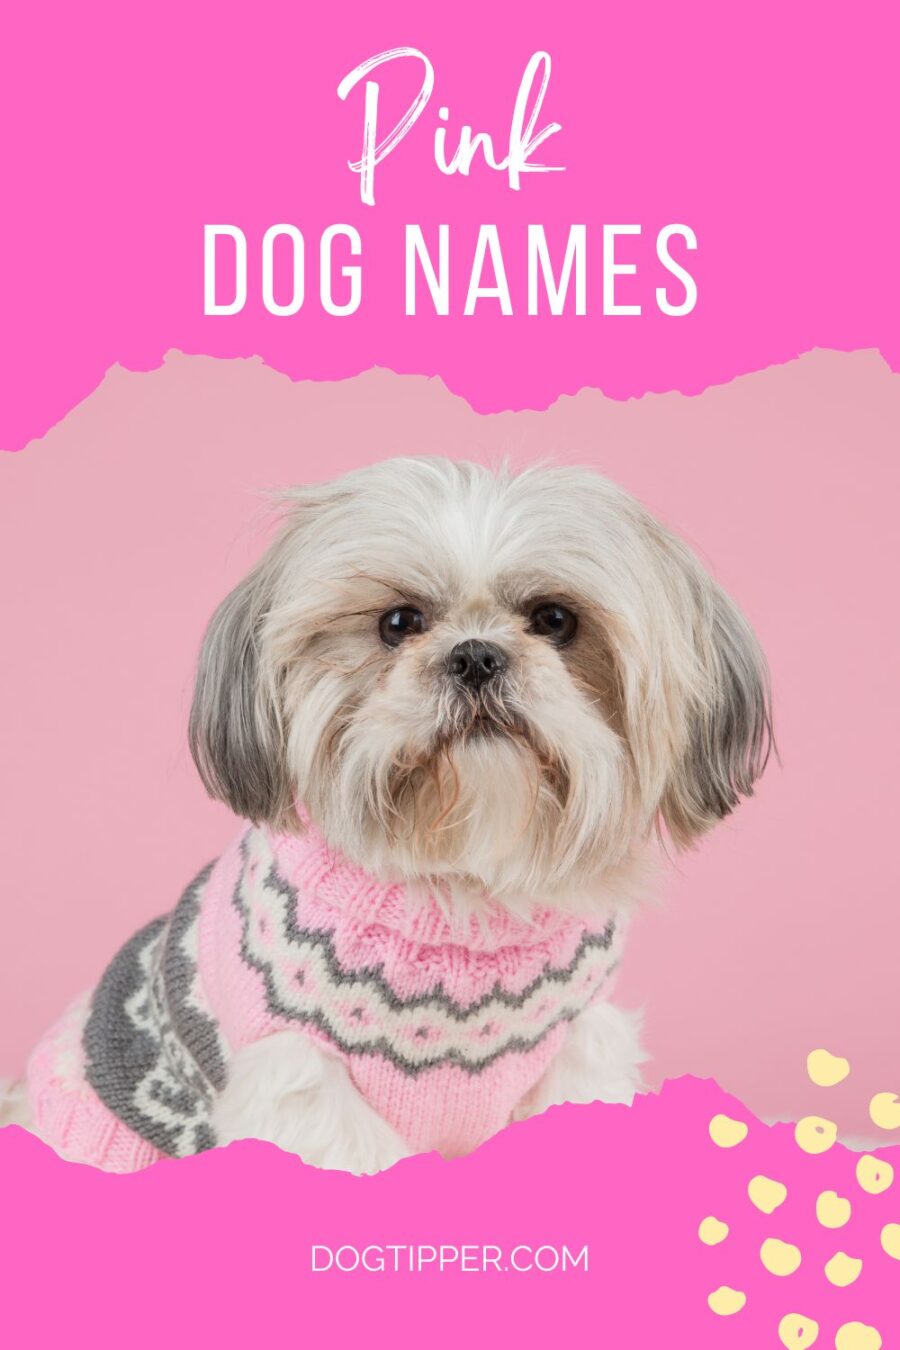 Pink dog names